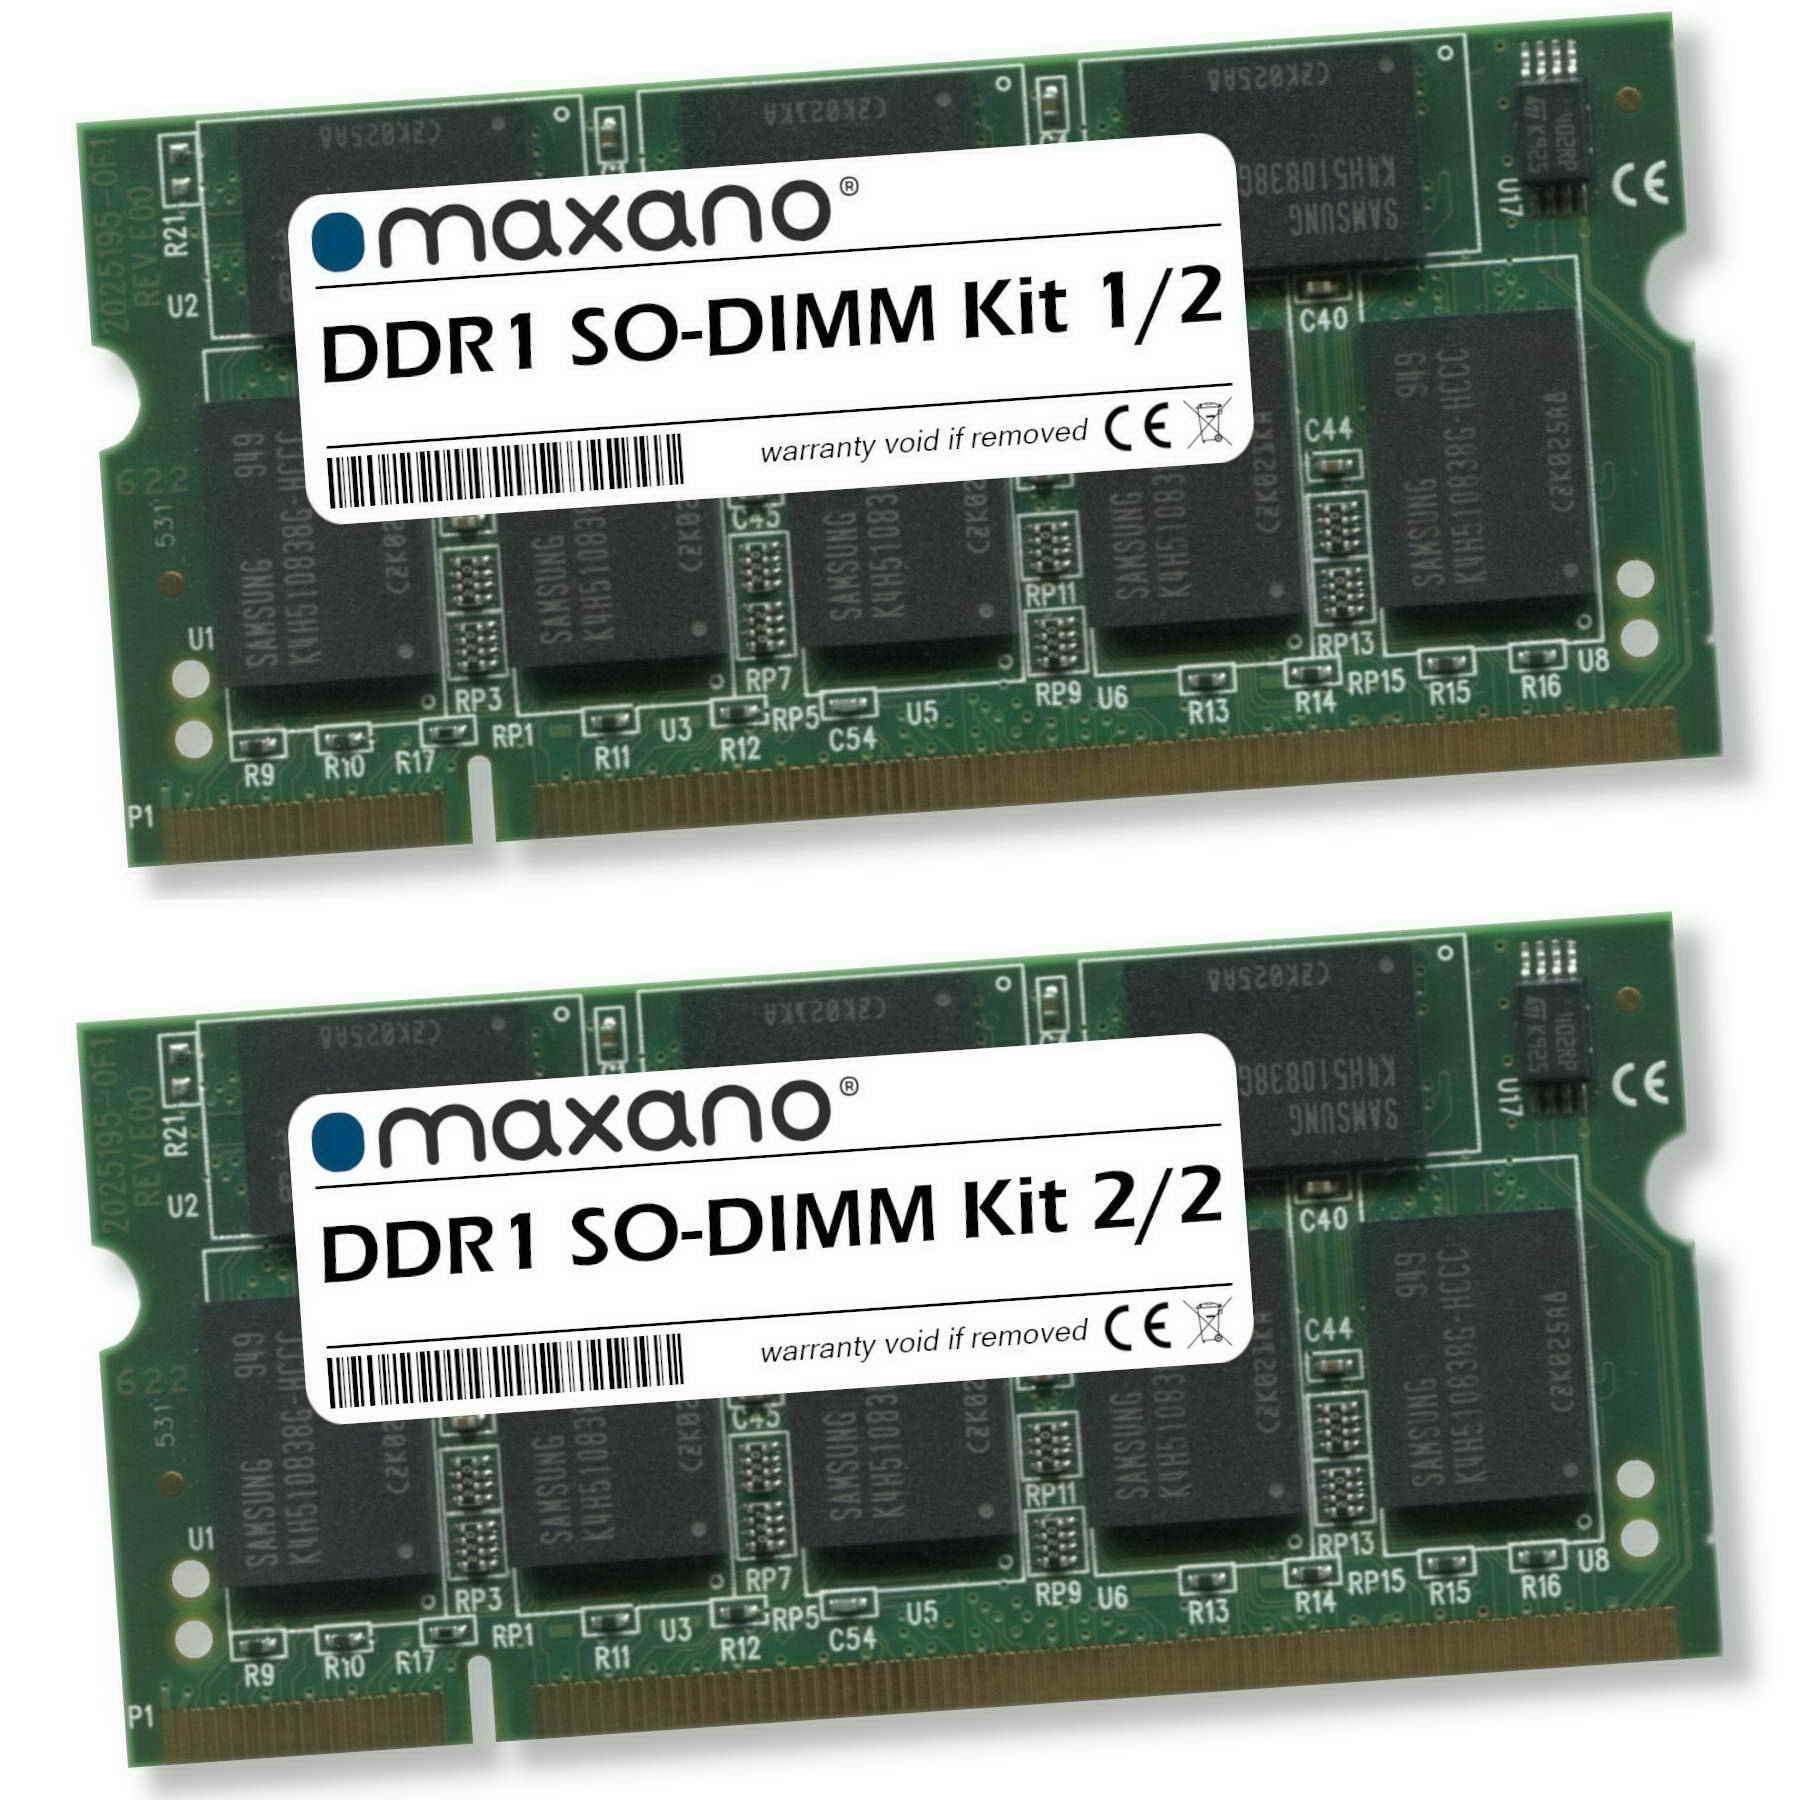 SDRAM 1GB SO-DIMM) HPE GB HP MAXANO Kit 2GB 2 RAM Arbeitsspeicher nx9105 / Compaq für 2x (PC-2700